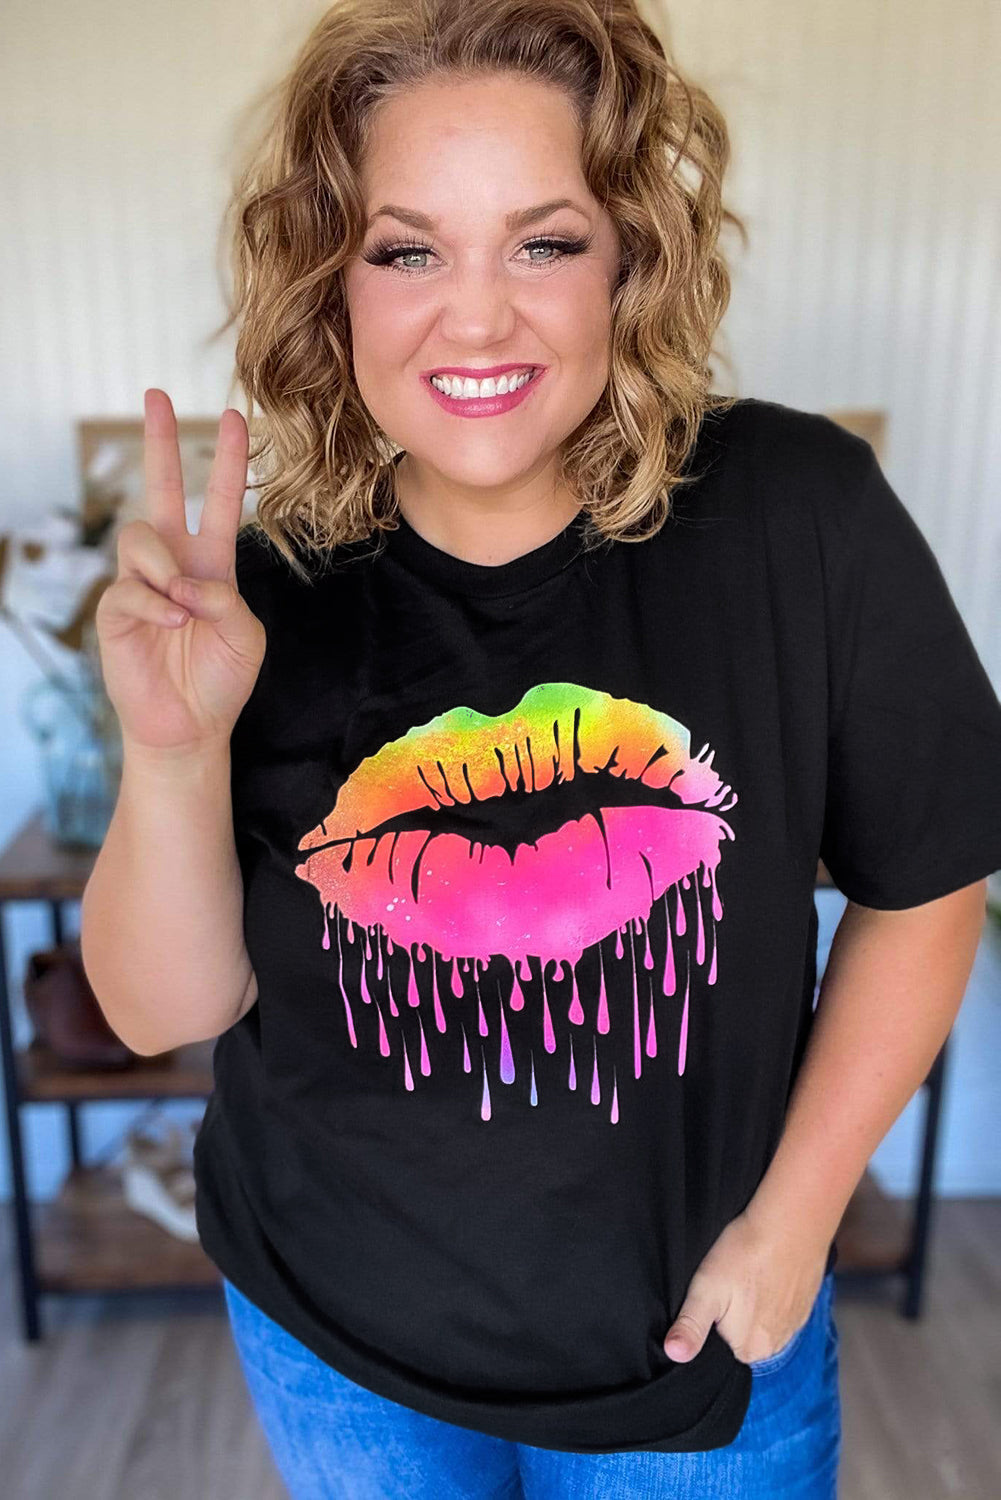 Neon Lips Graphic Plus Size T-Shirt